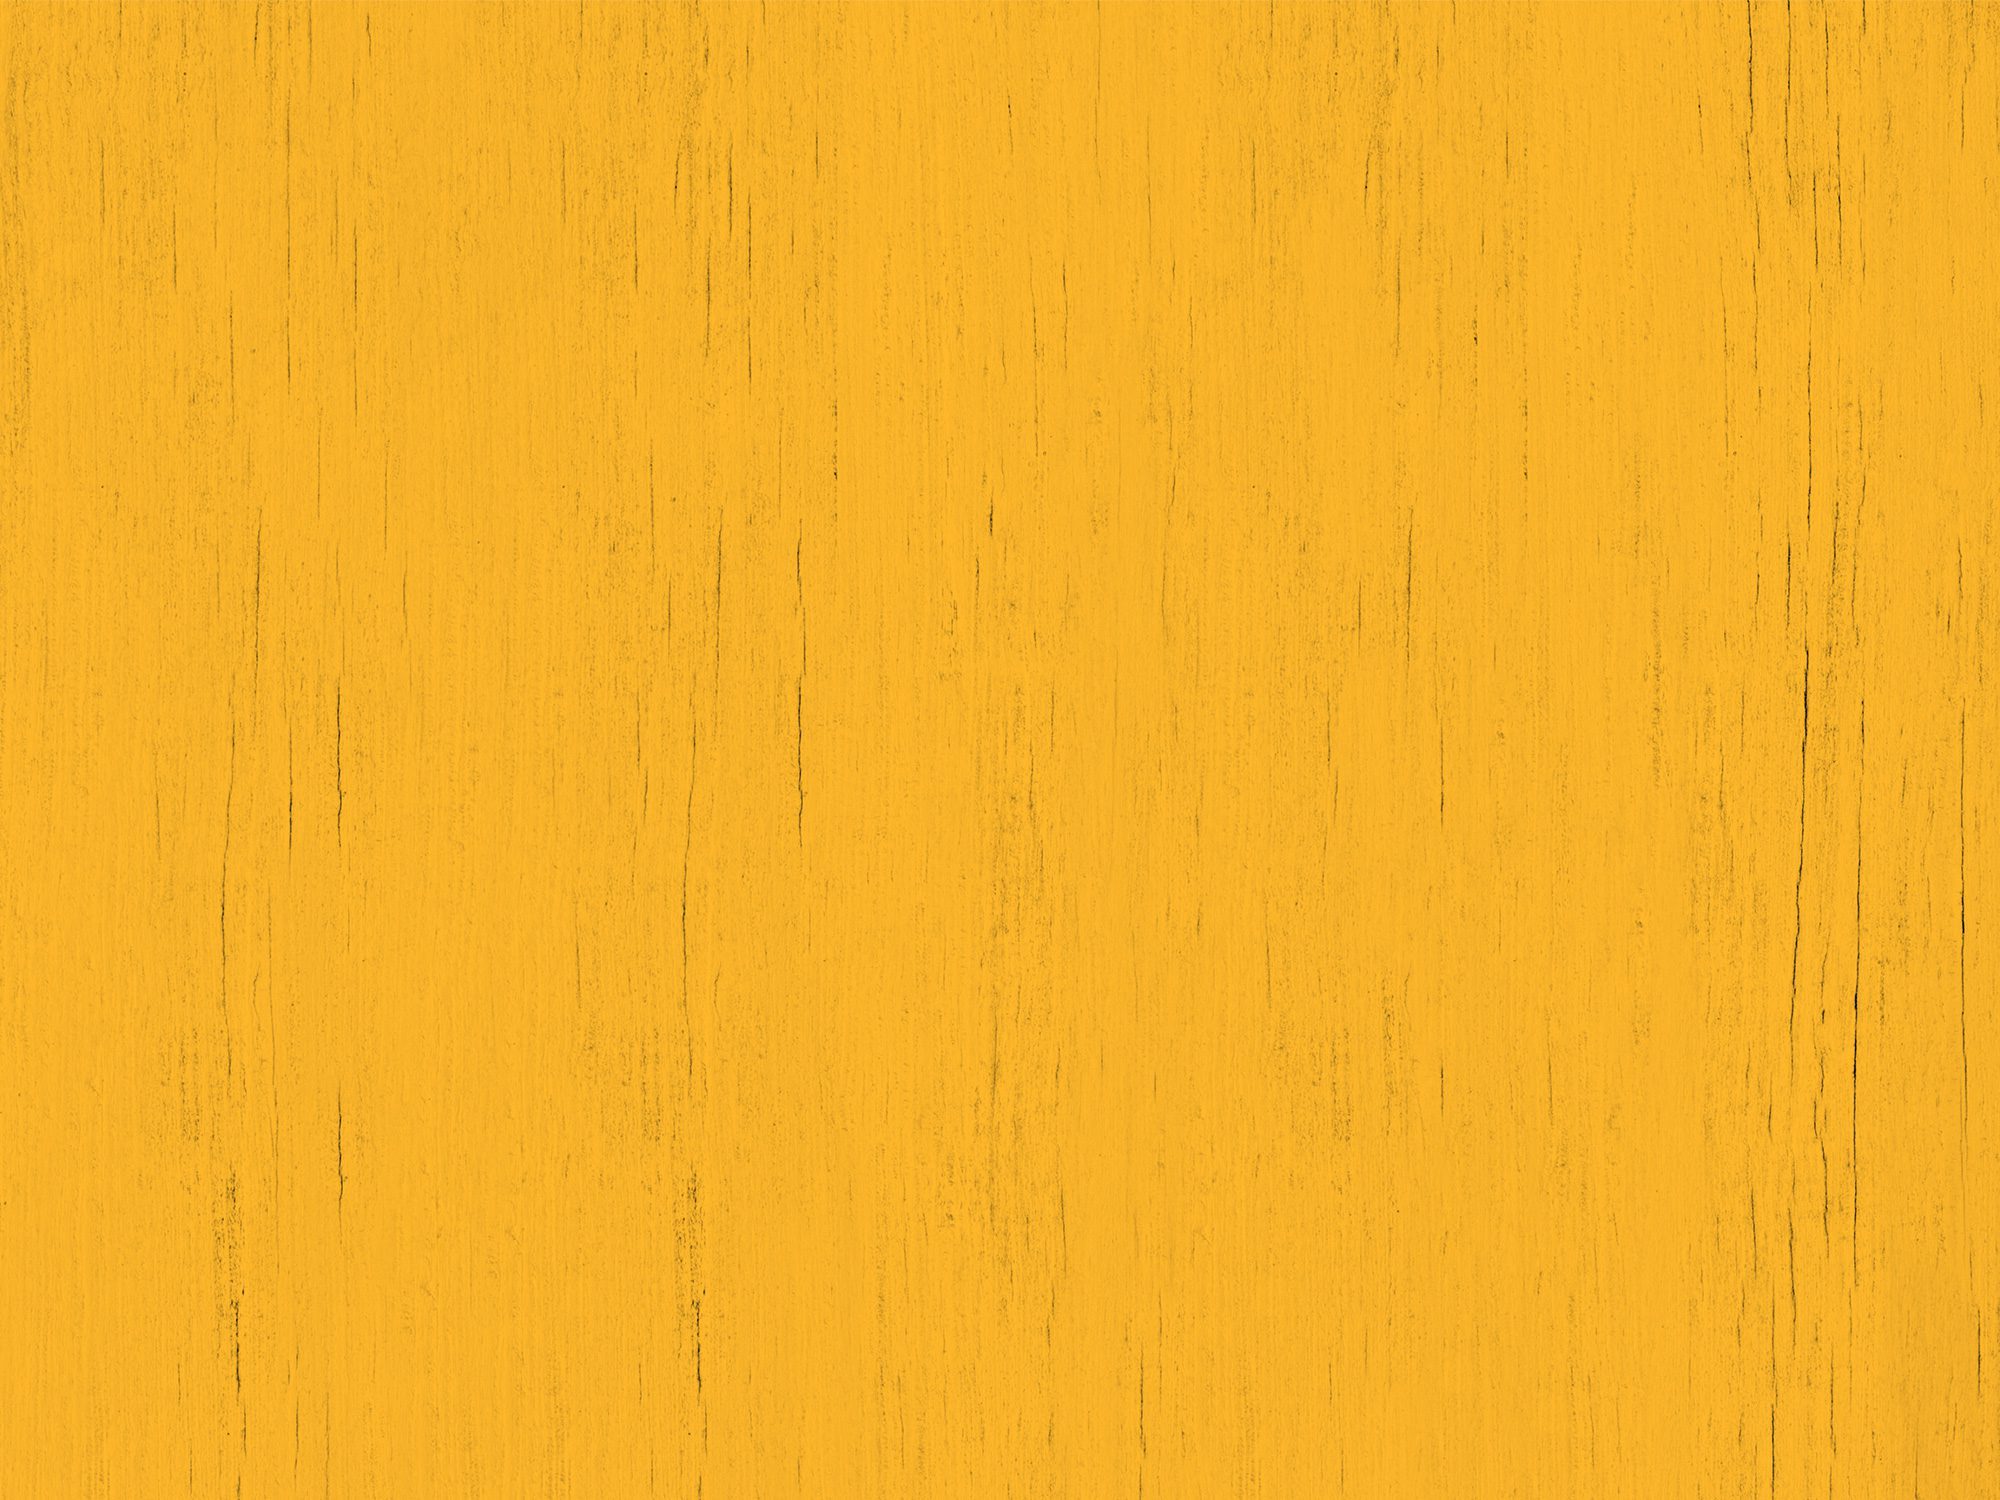 https://b2723736.smushcdn.com/2723736/wp-content/uploads/2022/07/wood-yellow.jpg?lossy=1&strip=1&webp=1